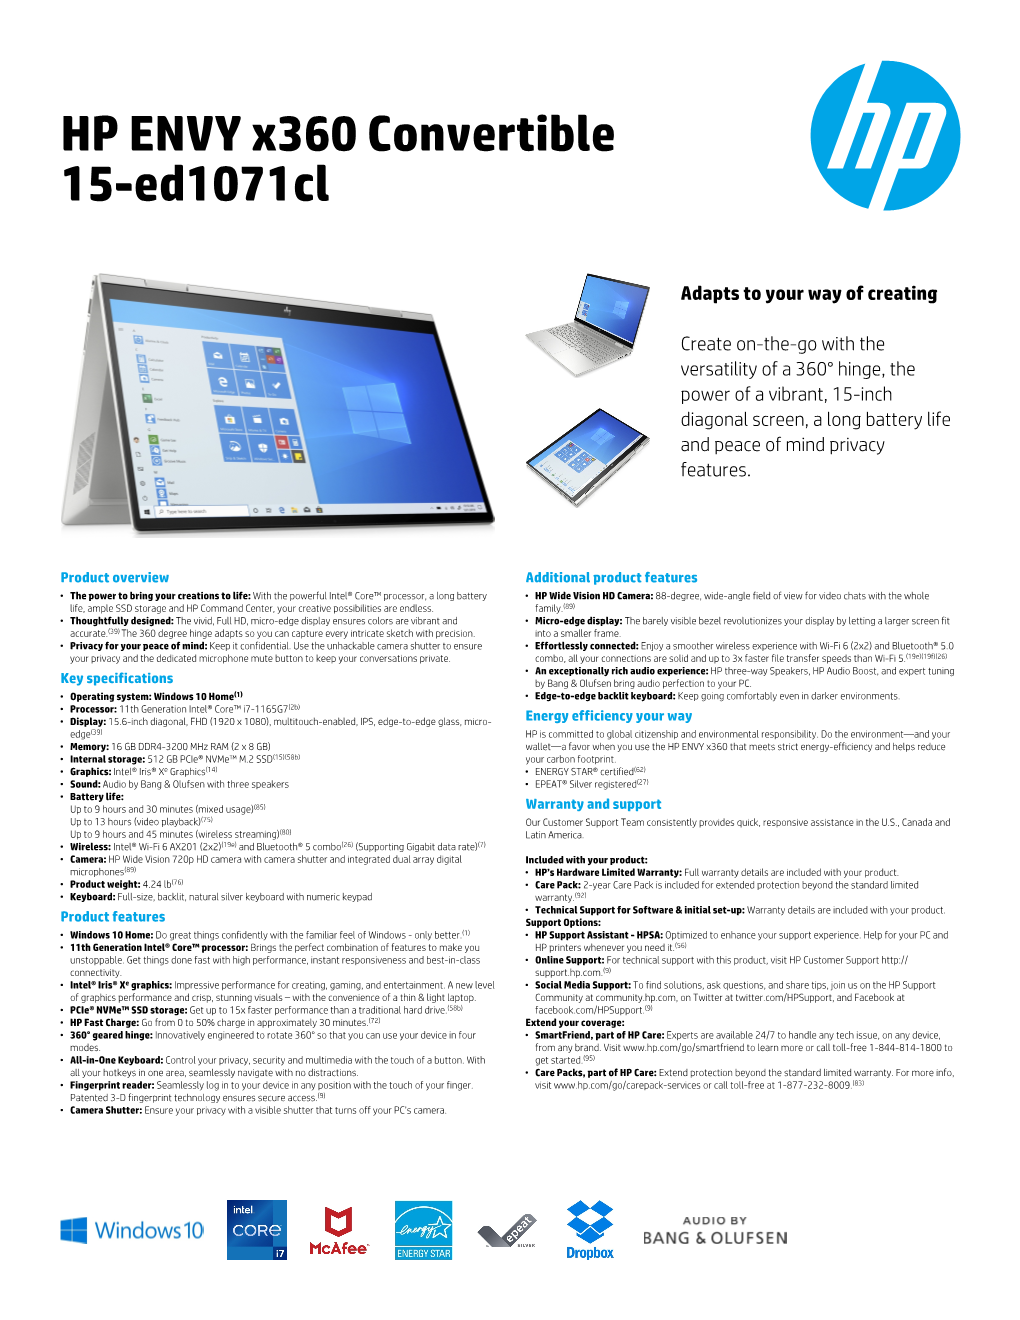 HP ENVY X360 Convertible 15-Ed1071cl